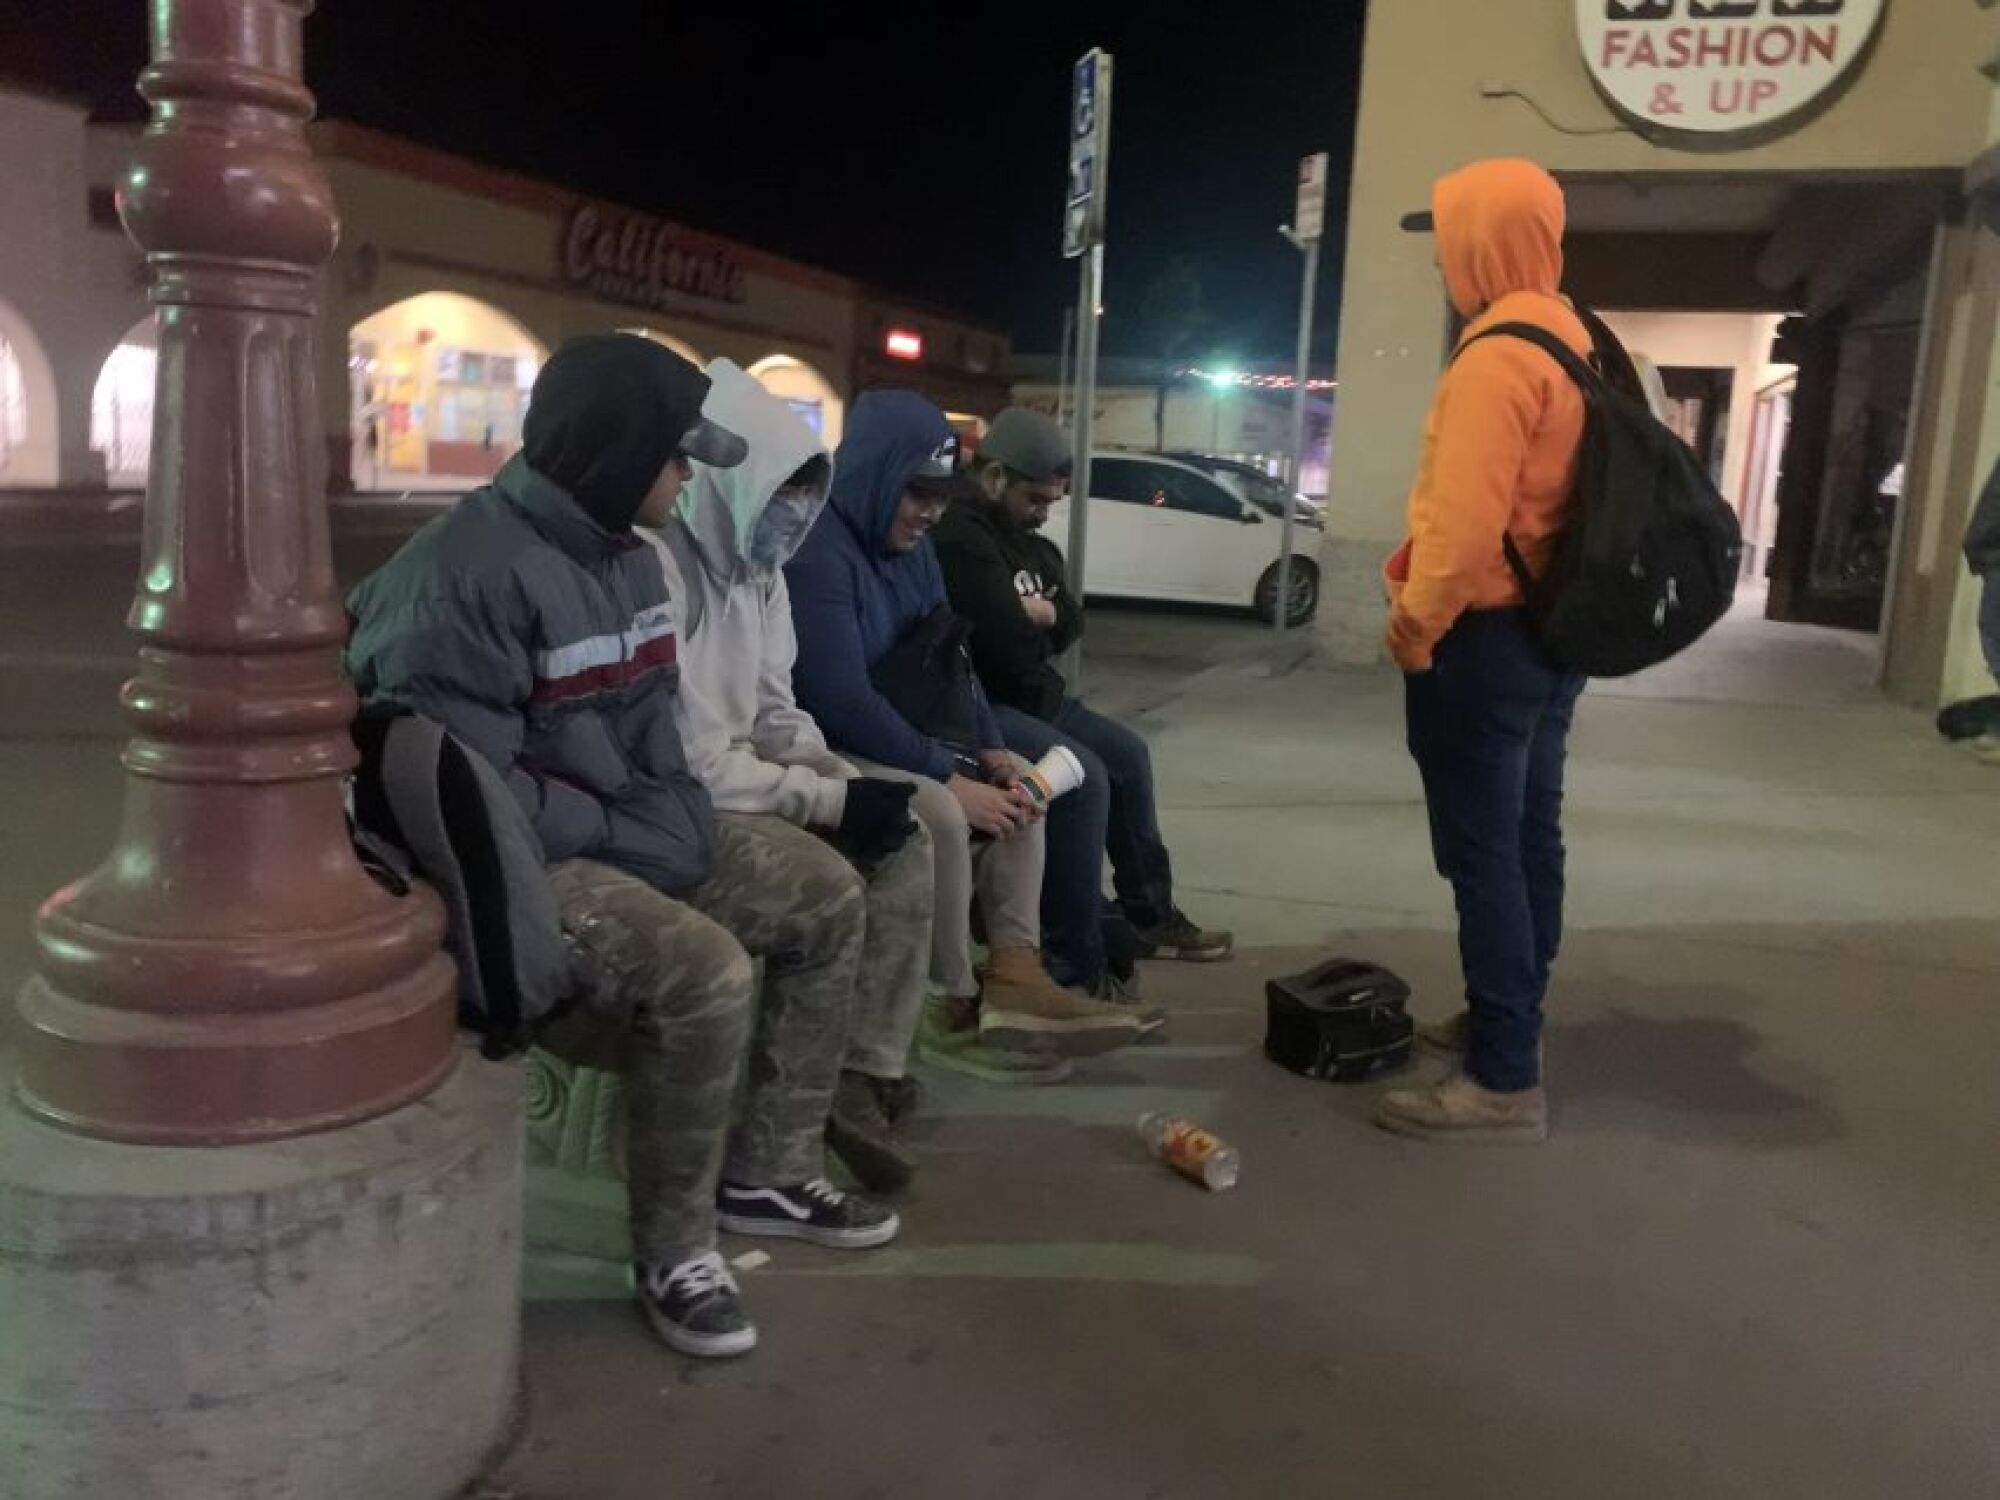 Four men in hoodies wait in a dark shopping center parking lot